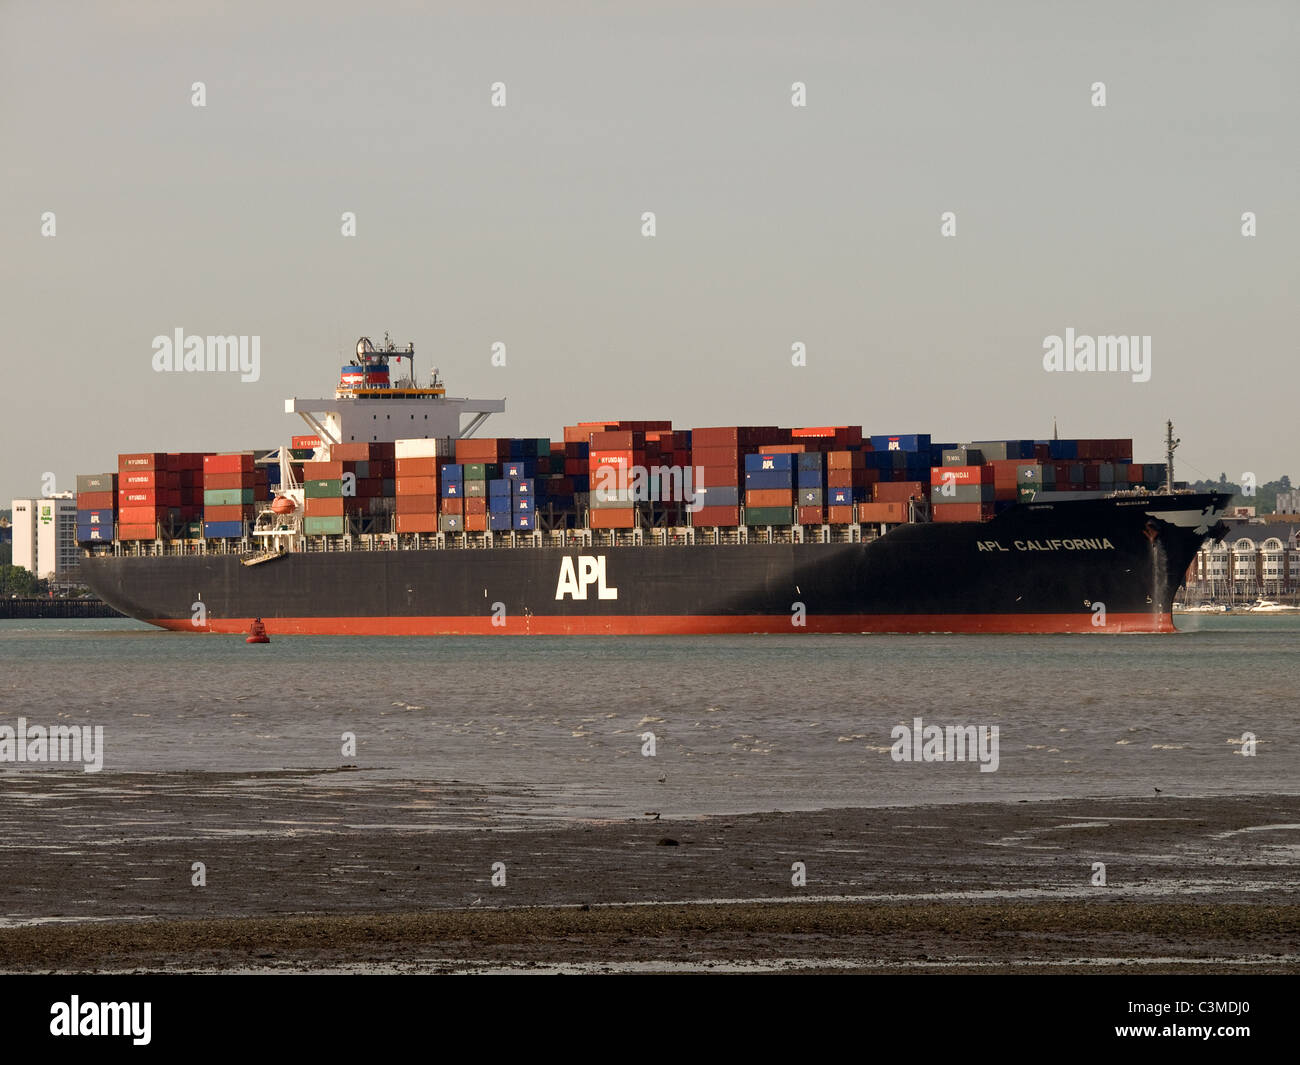 Container ship APL California leaving Southampton Hampshire England UK Stock Photo